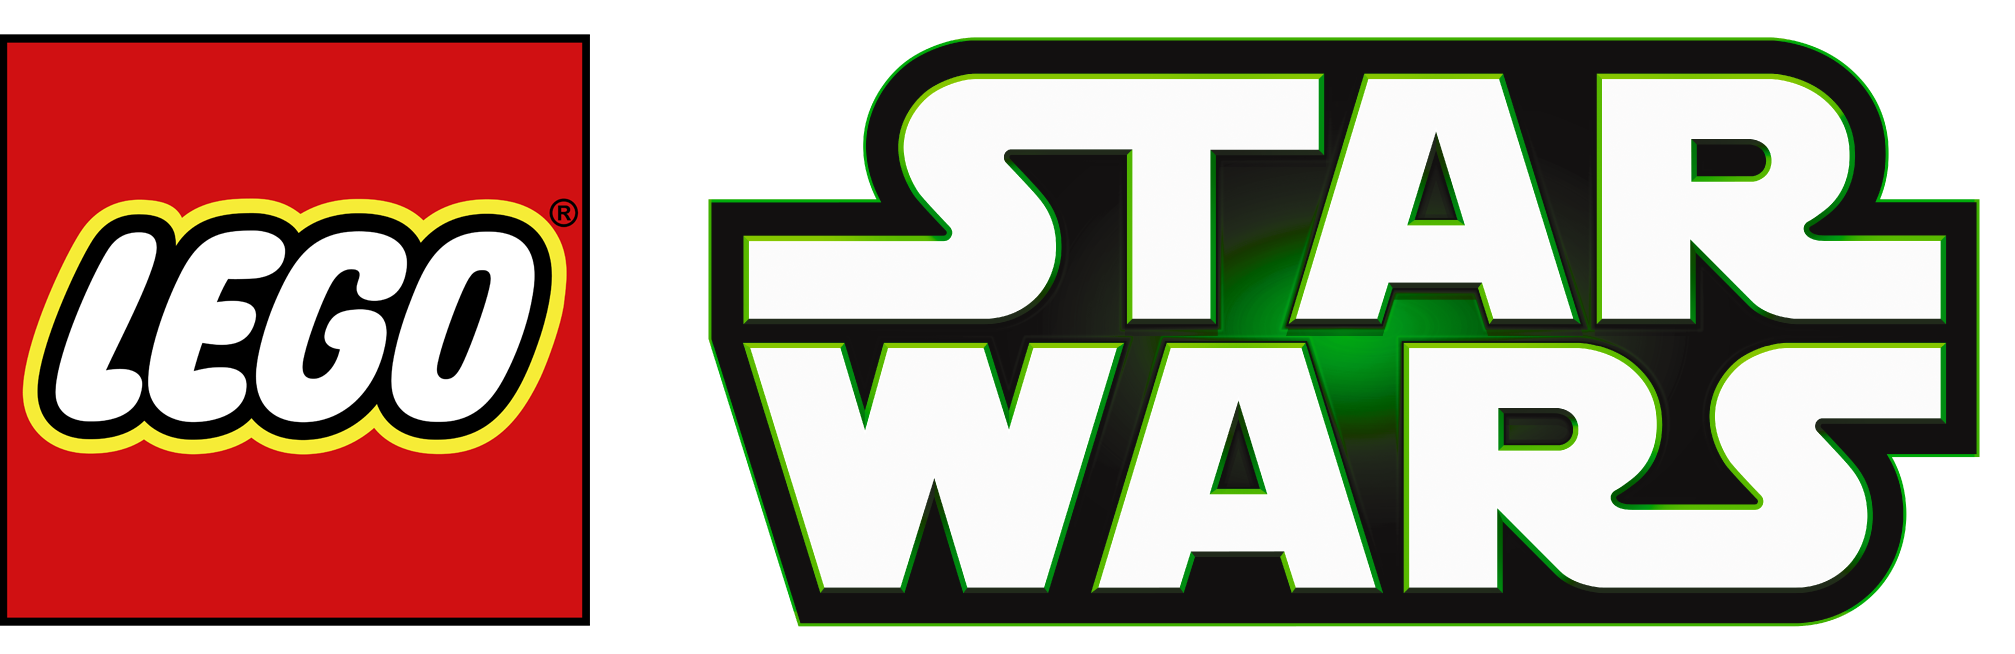 Lego Star Wars Logo Png